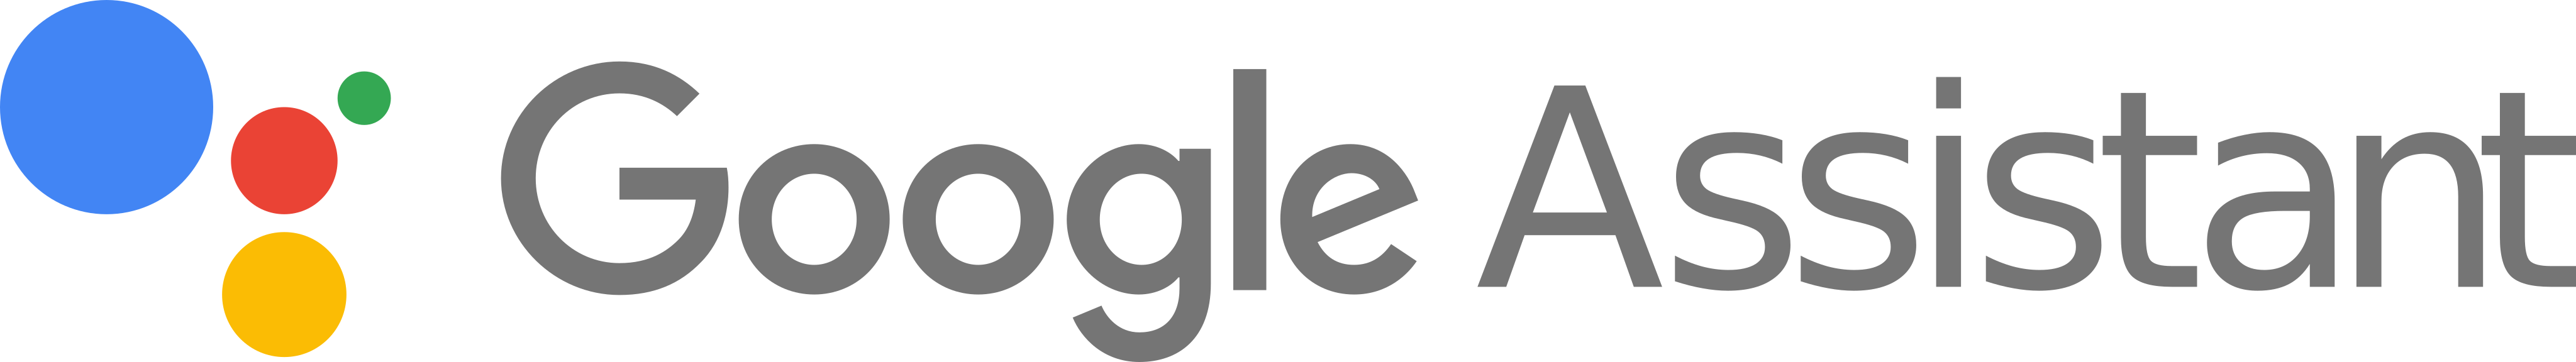 google-assistant-logo.png